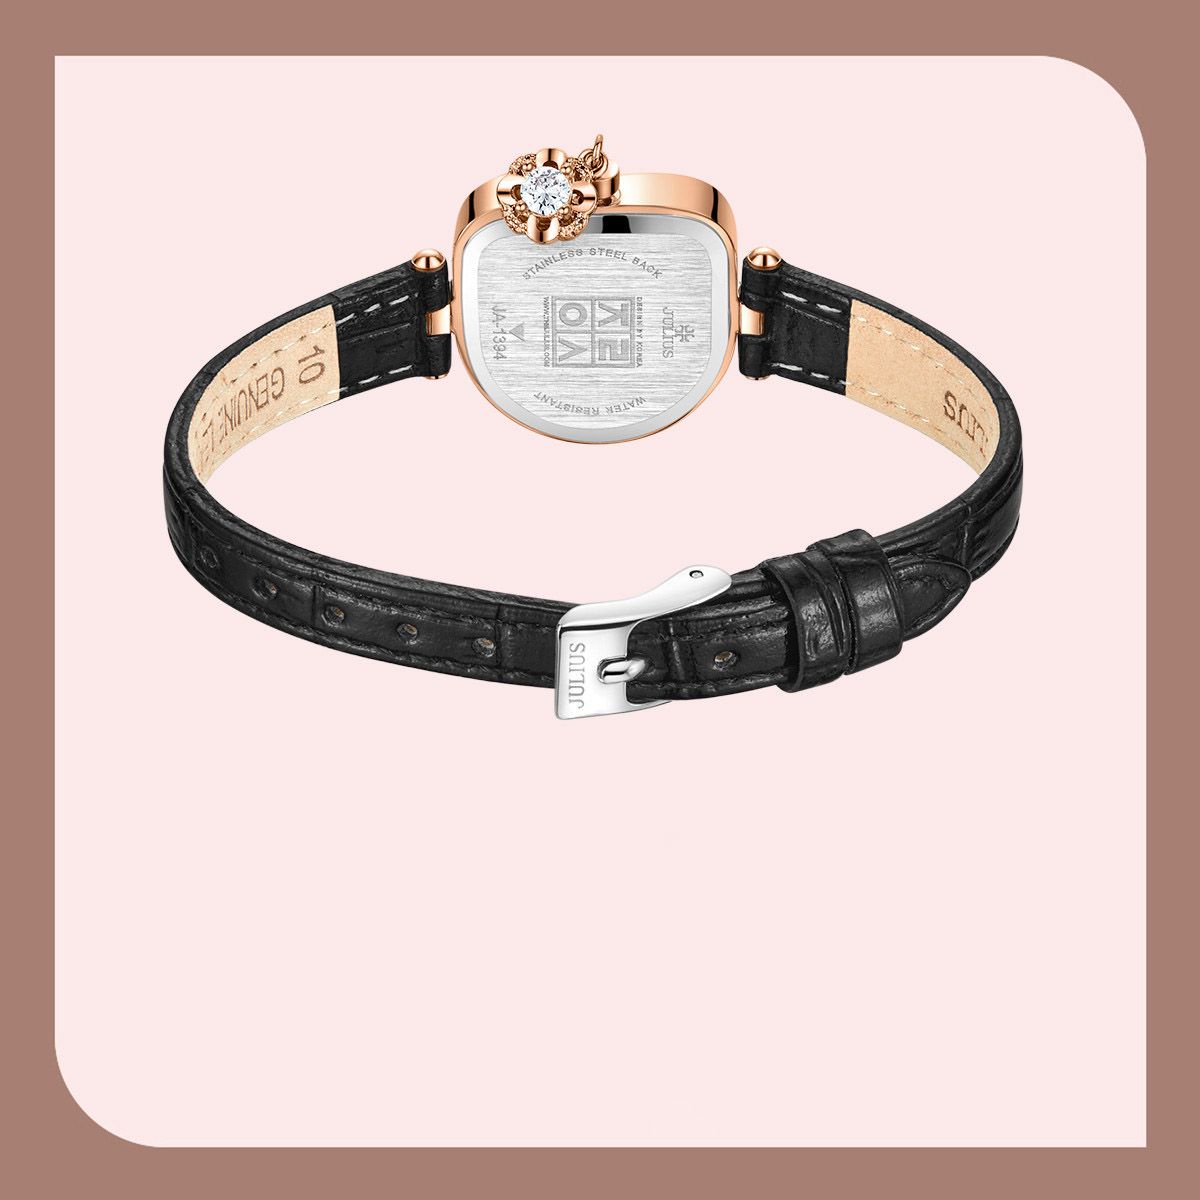  Đồng hồ nữ Julius JA-1394 dây da - Size 23 